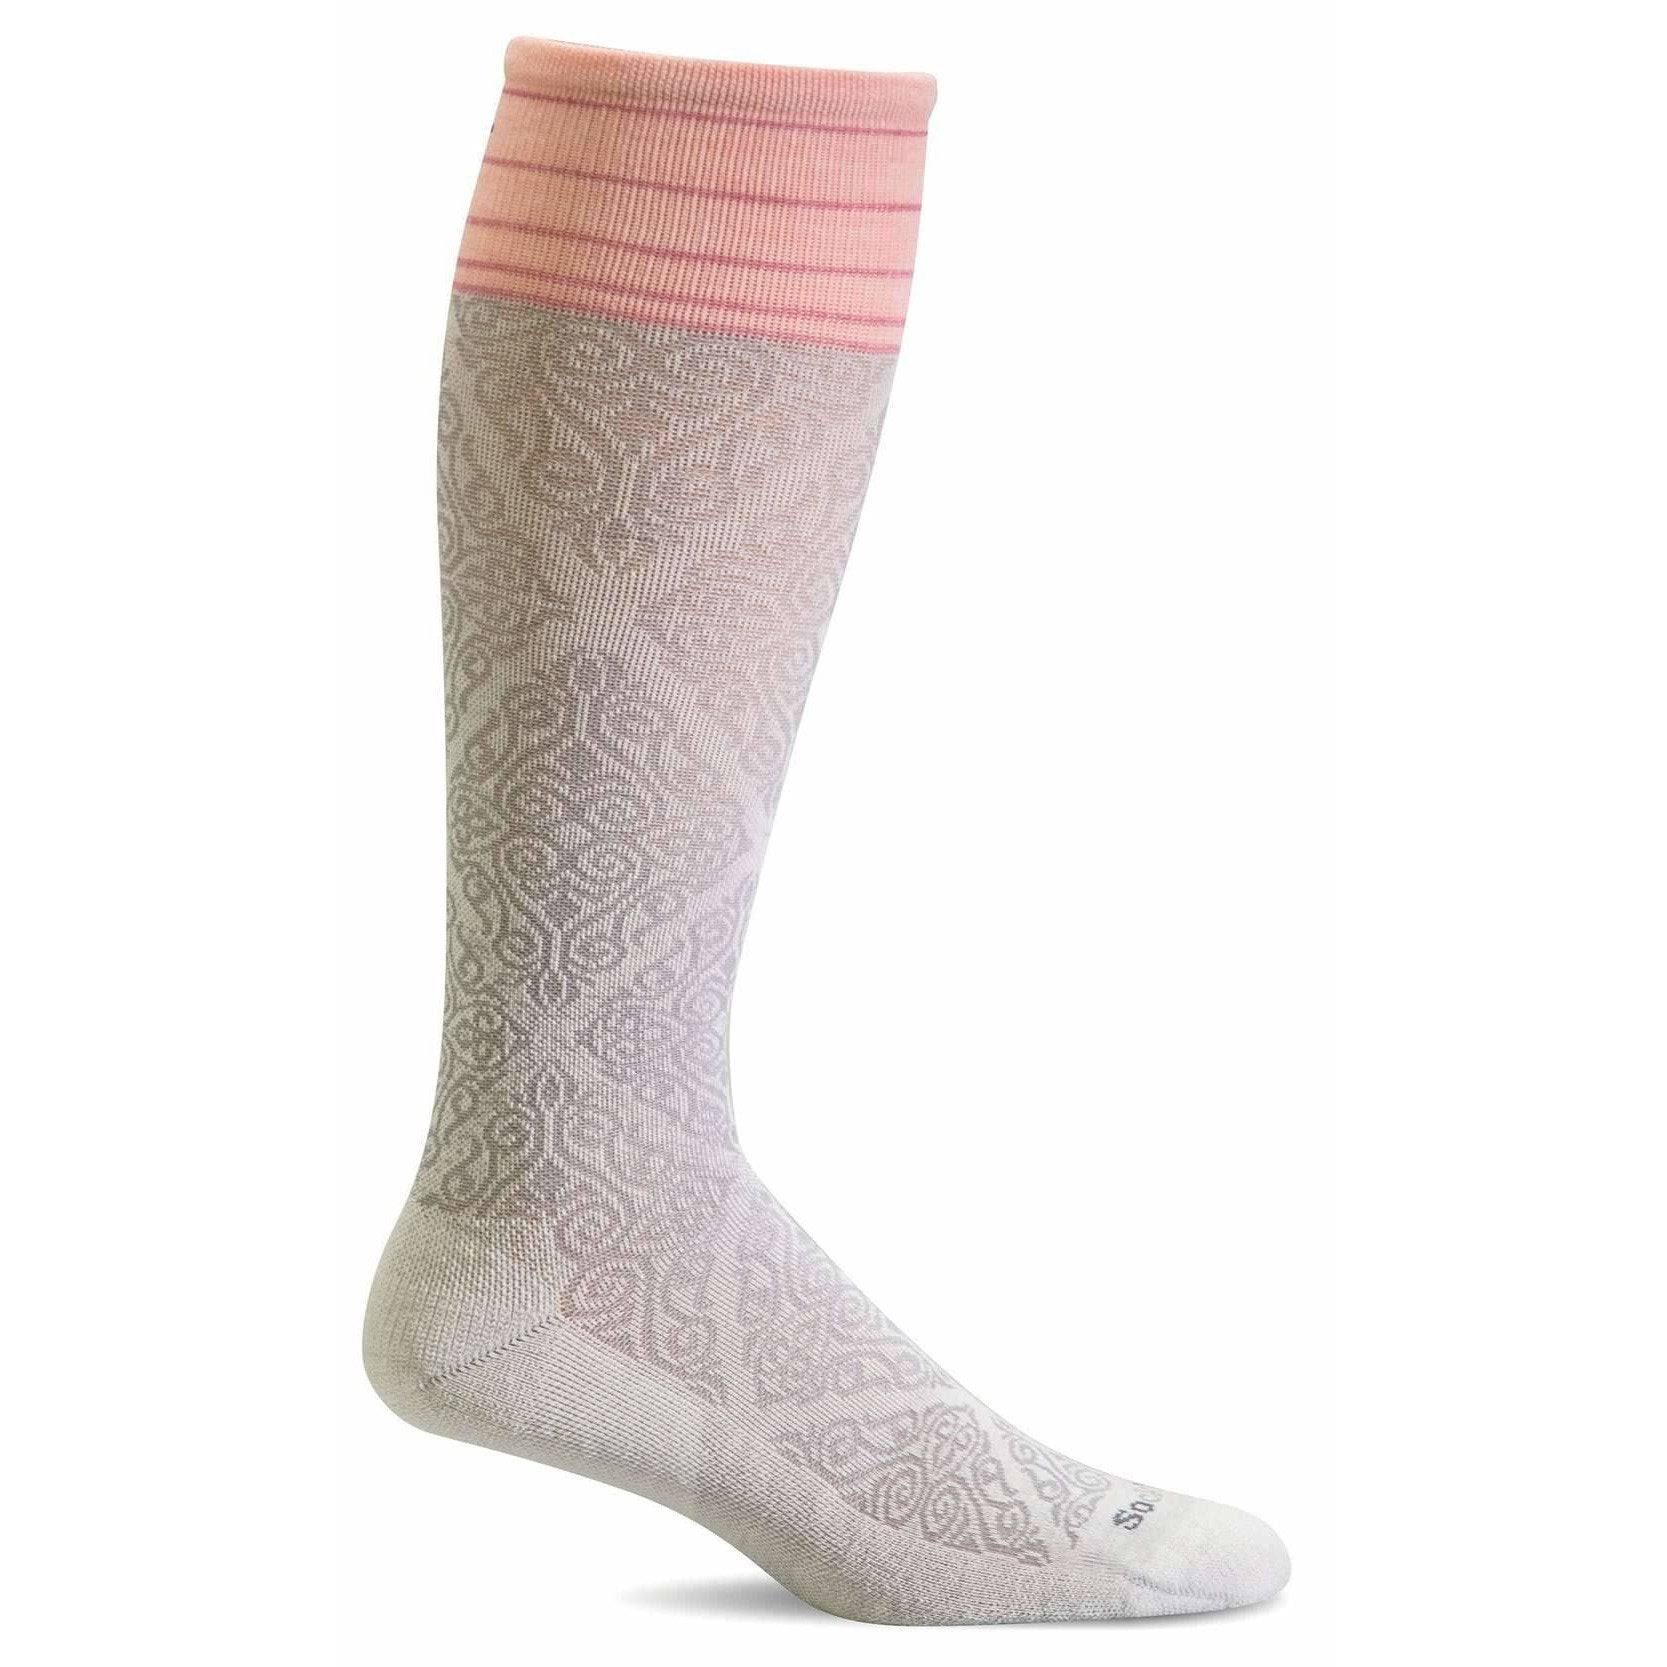 Sockwell Women's The Raj Firm Compression Socks - Natural